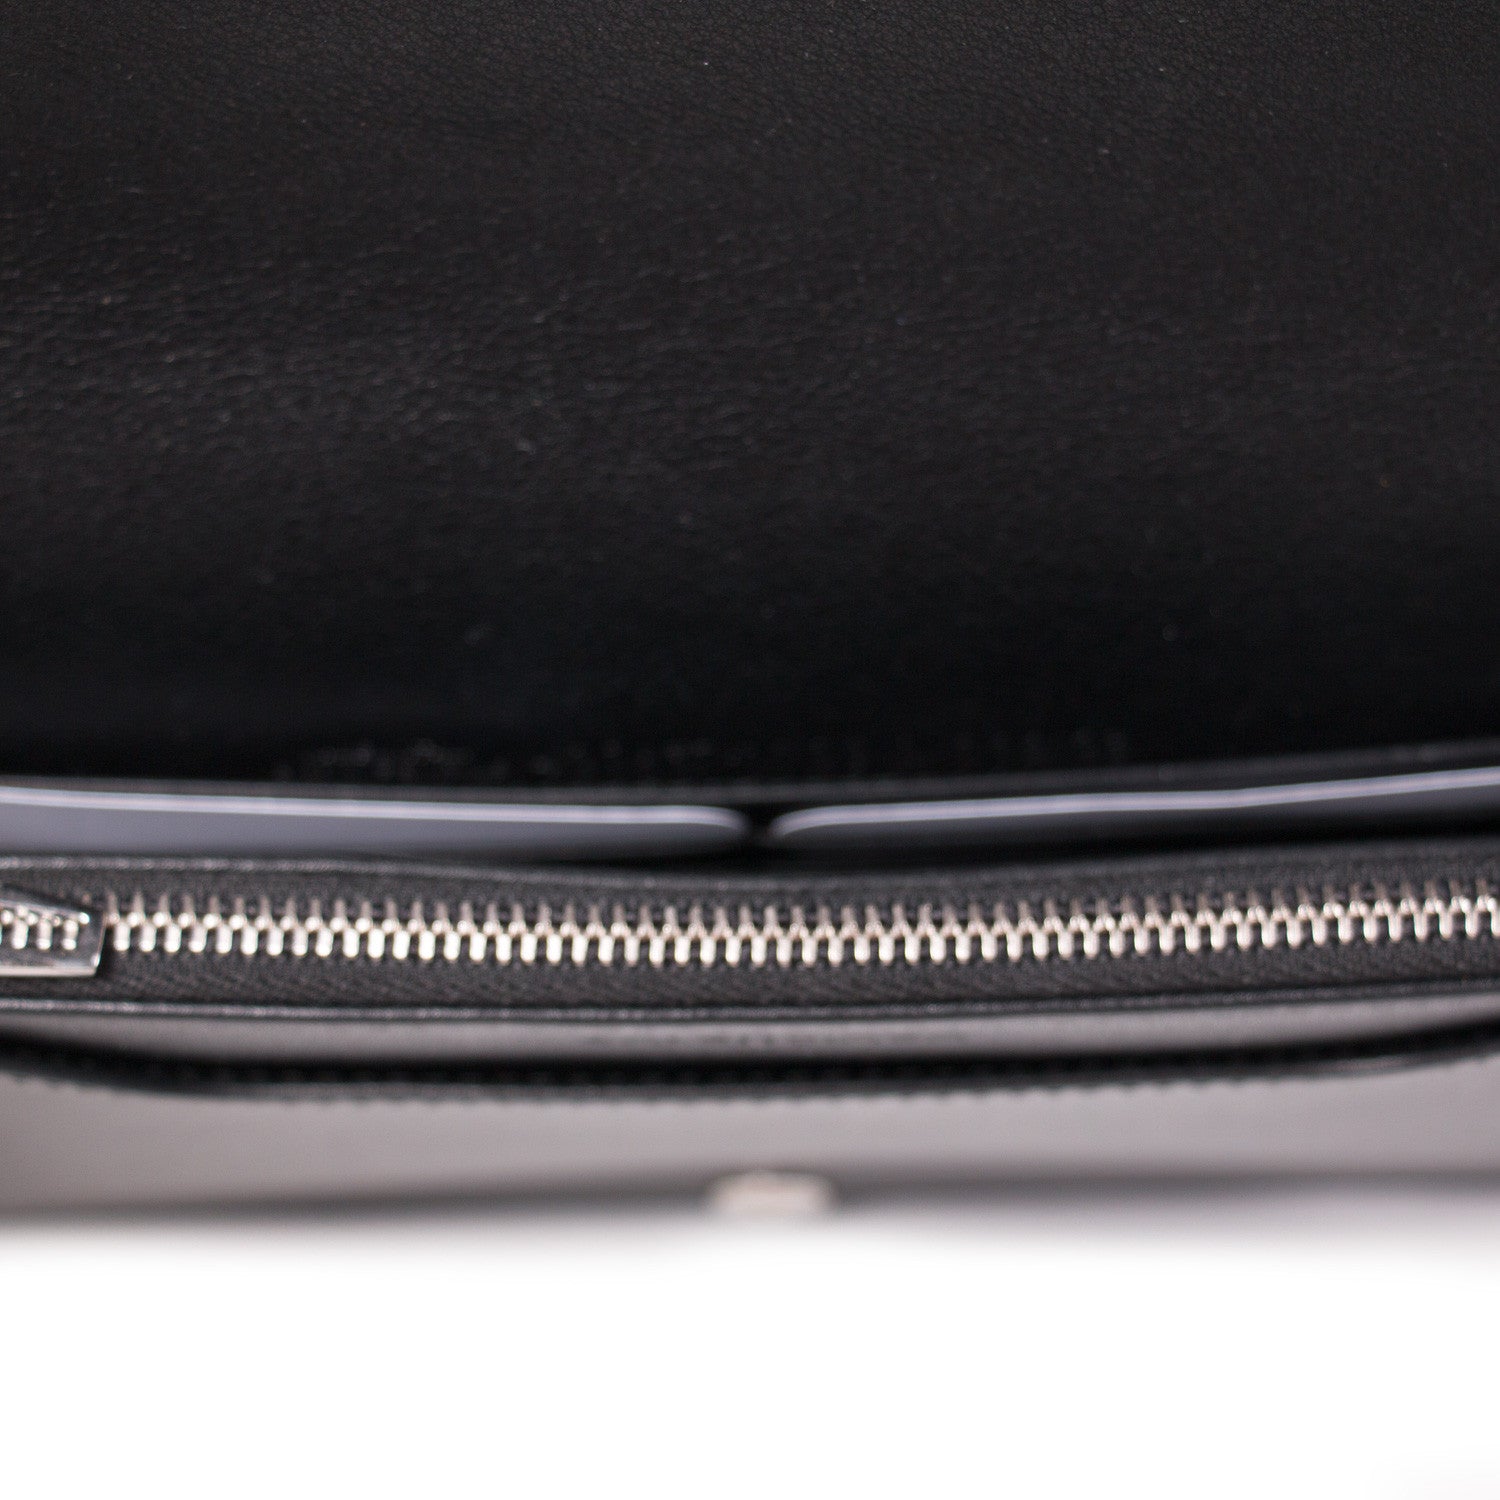 Shop authentic Balenciaga Metal Plate Shoulder Bag at revogue for just